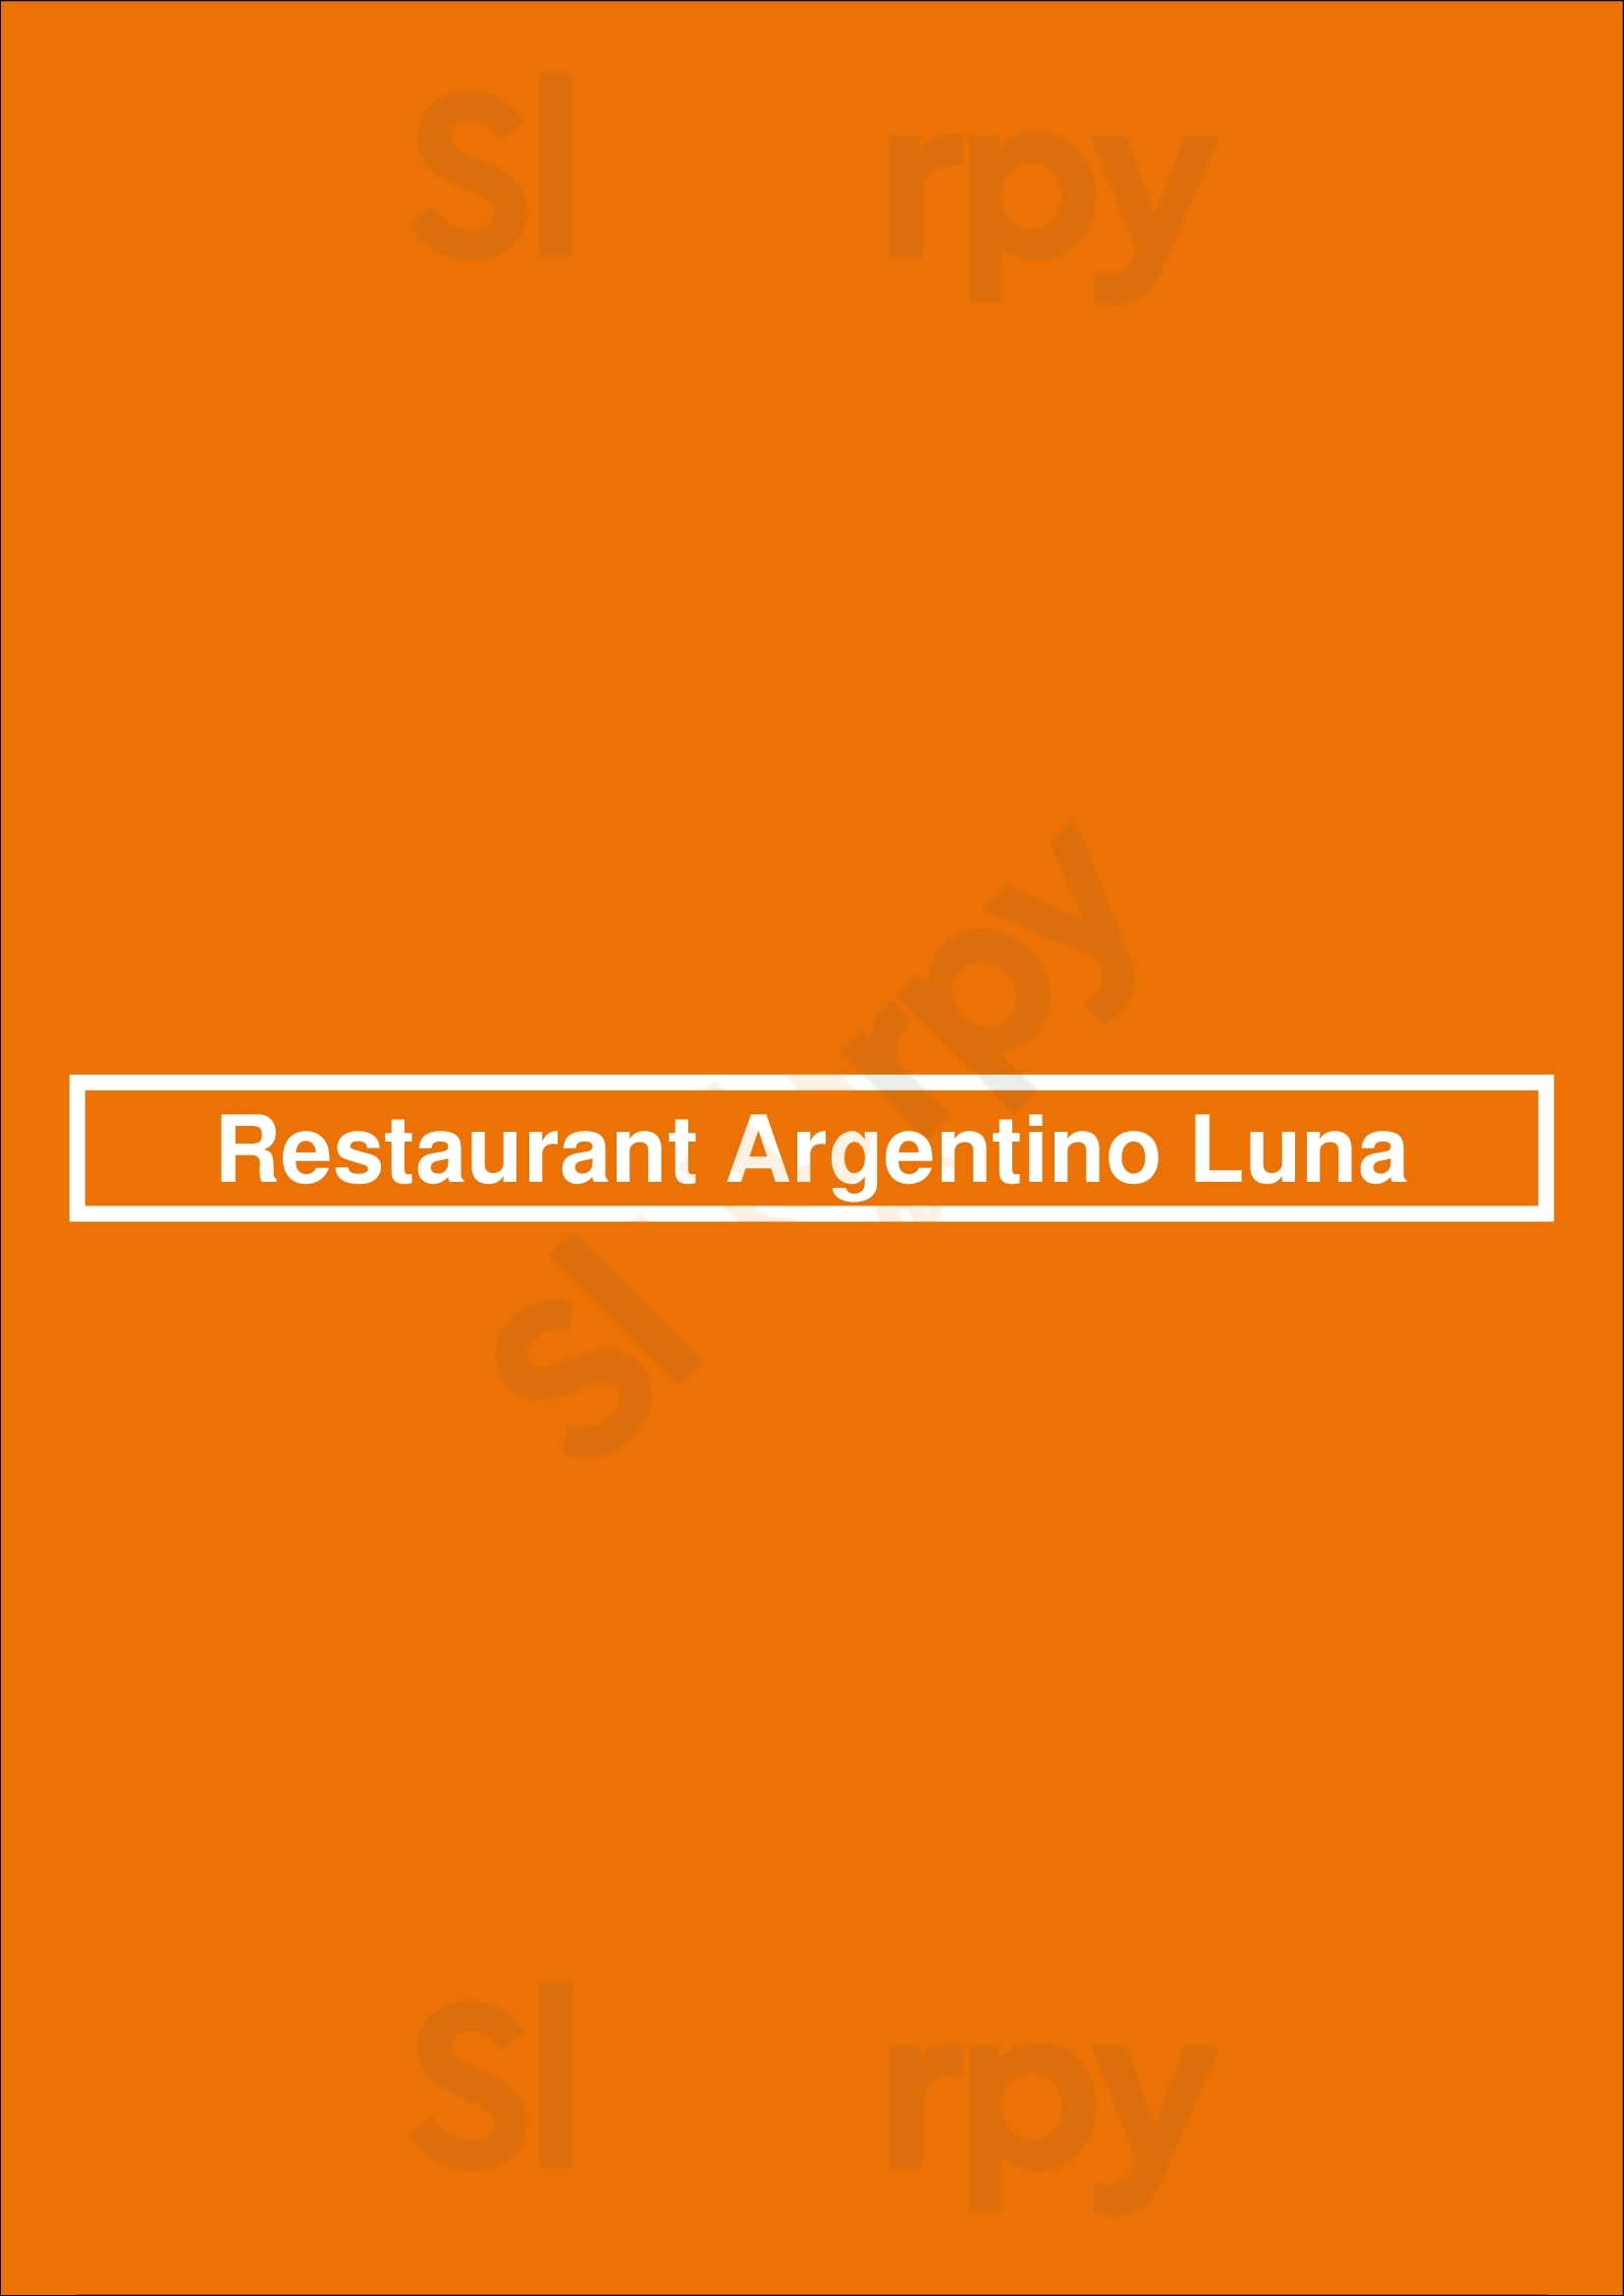 Restaurant Argentino Luna Amsterdam Menu - 1